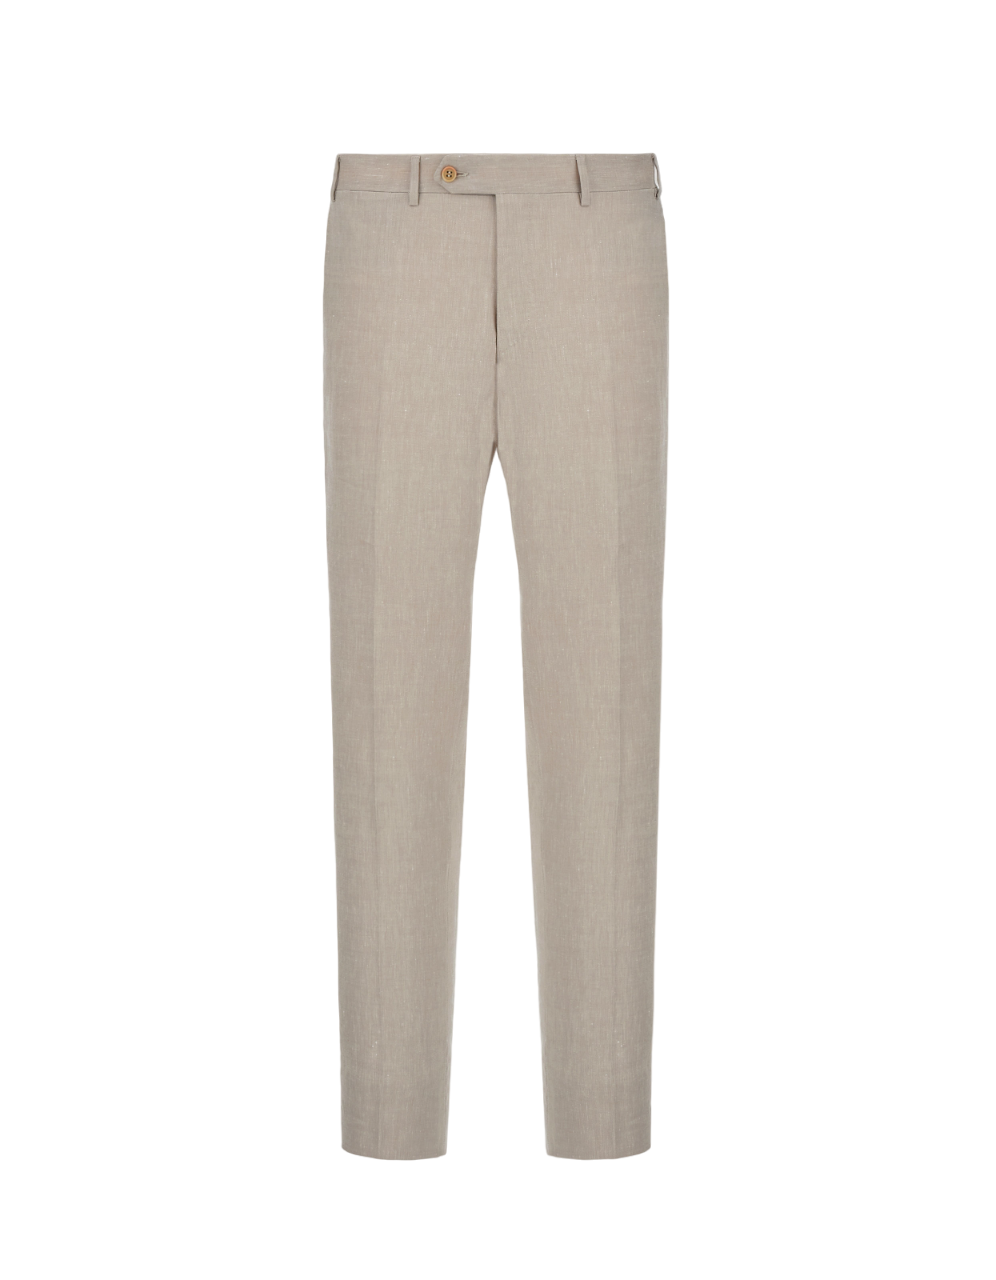 Canali Siena Classic Fit Linen Wool Blend Dress Pants in Oatmeal